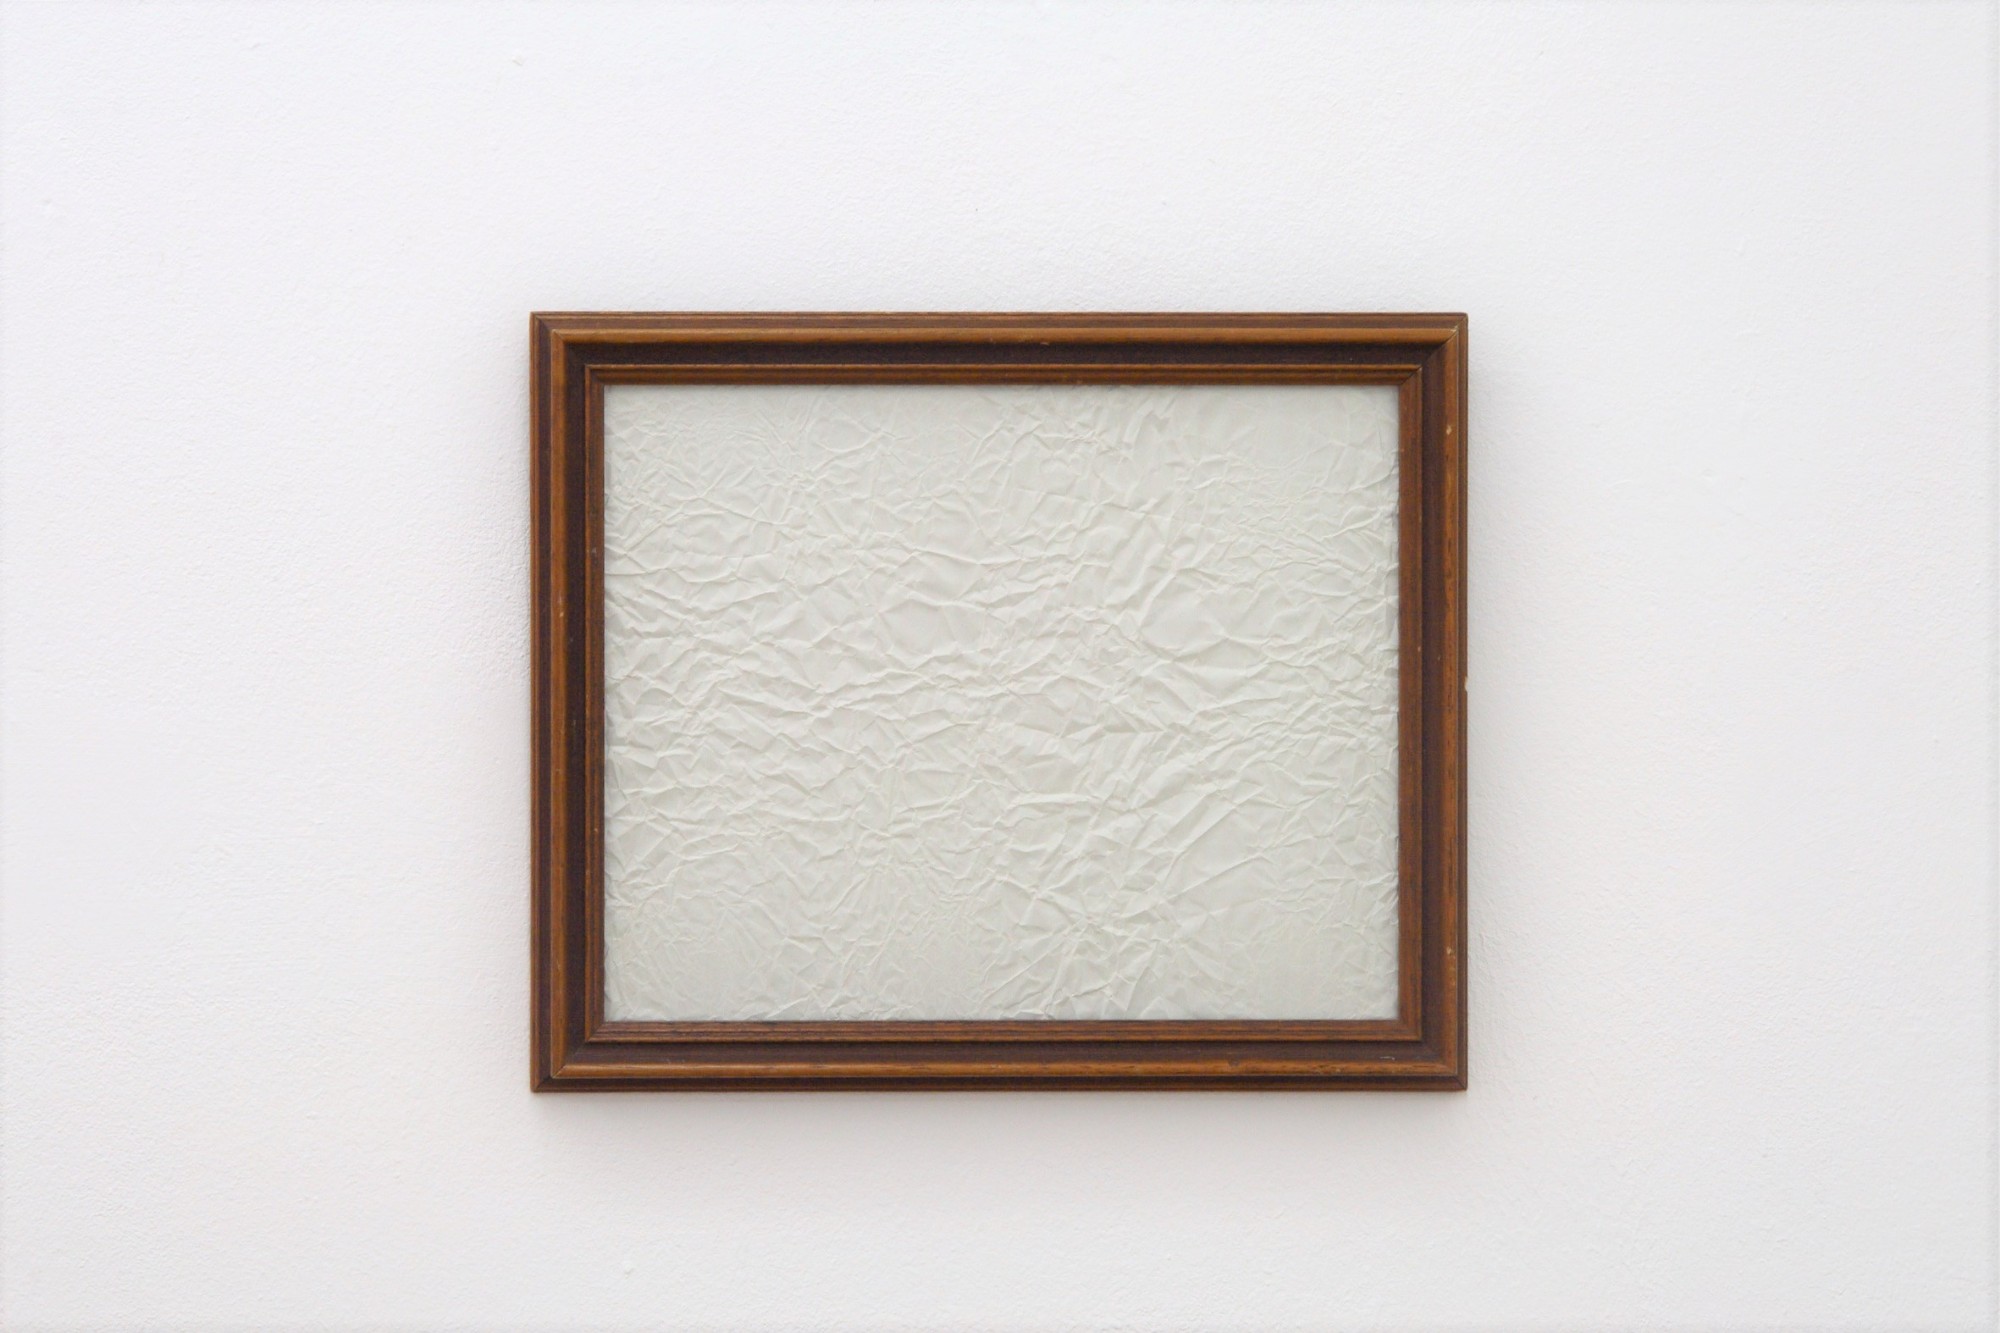 Anna Kolodziesjka, untitled (Mongolei), 2007, paper, wooden frame, 28 x 31cm